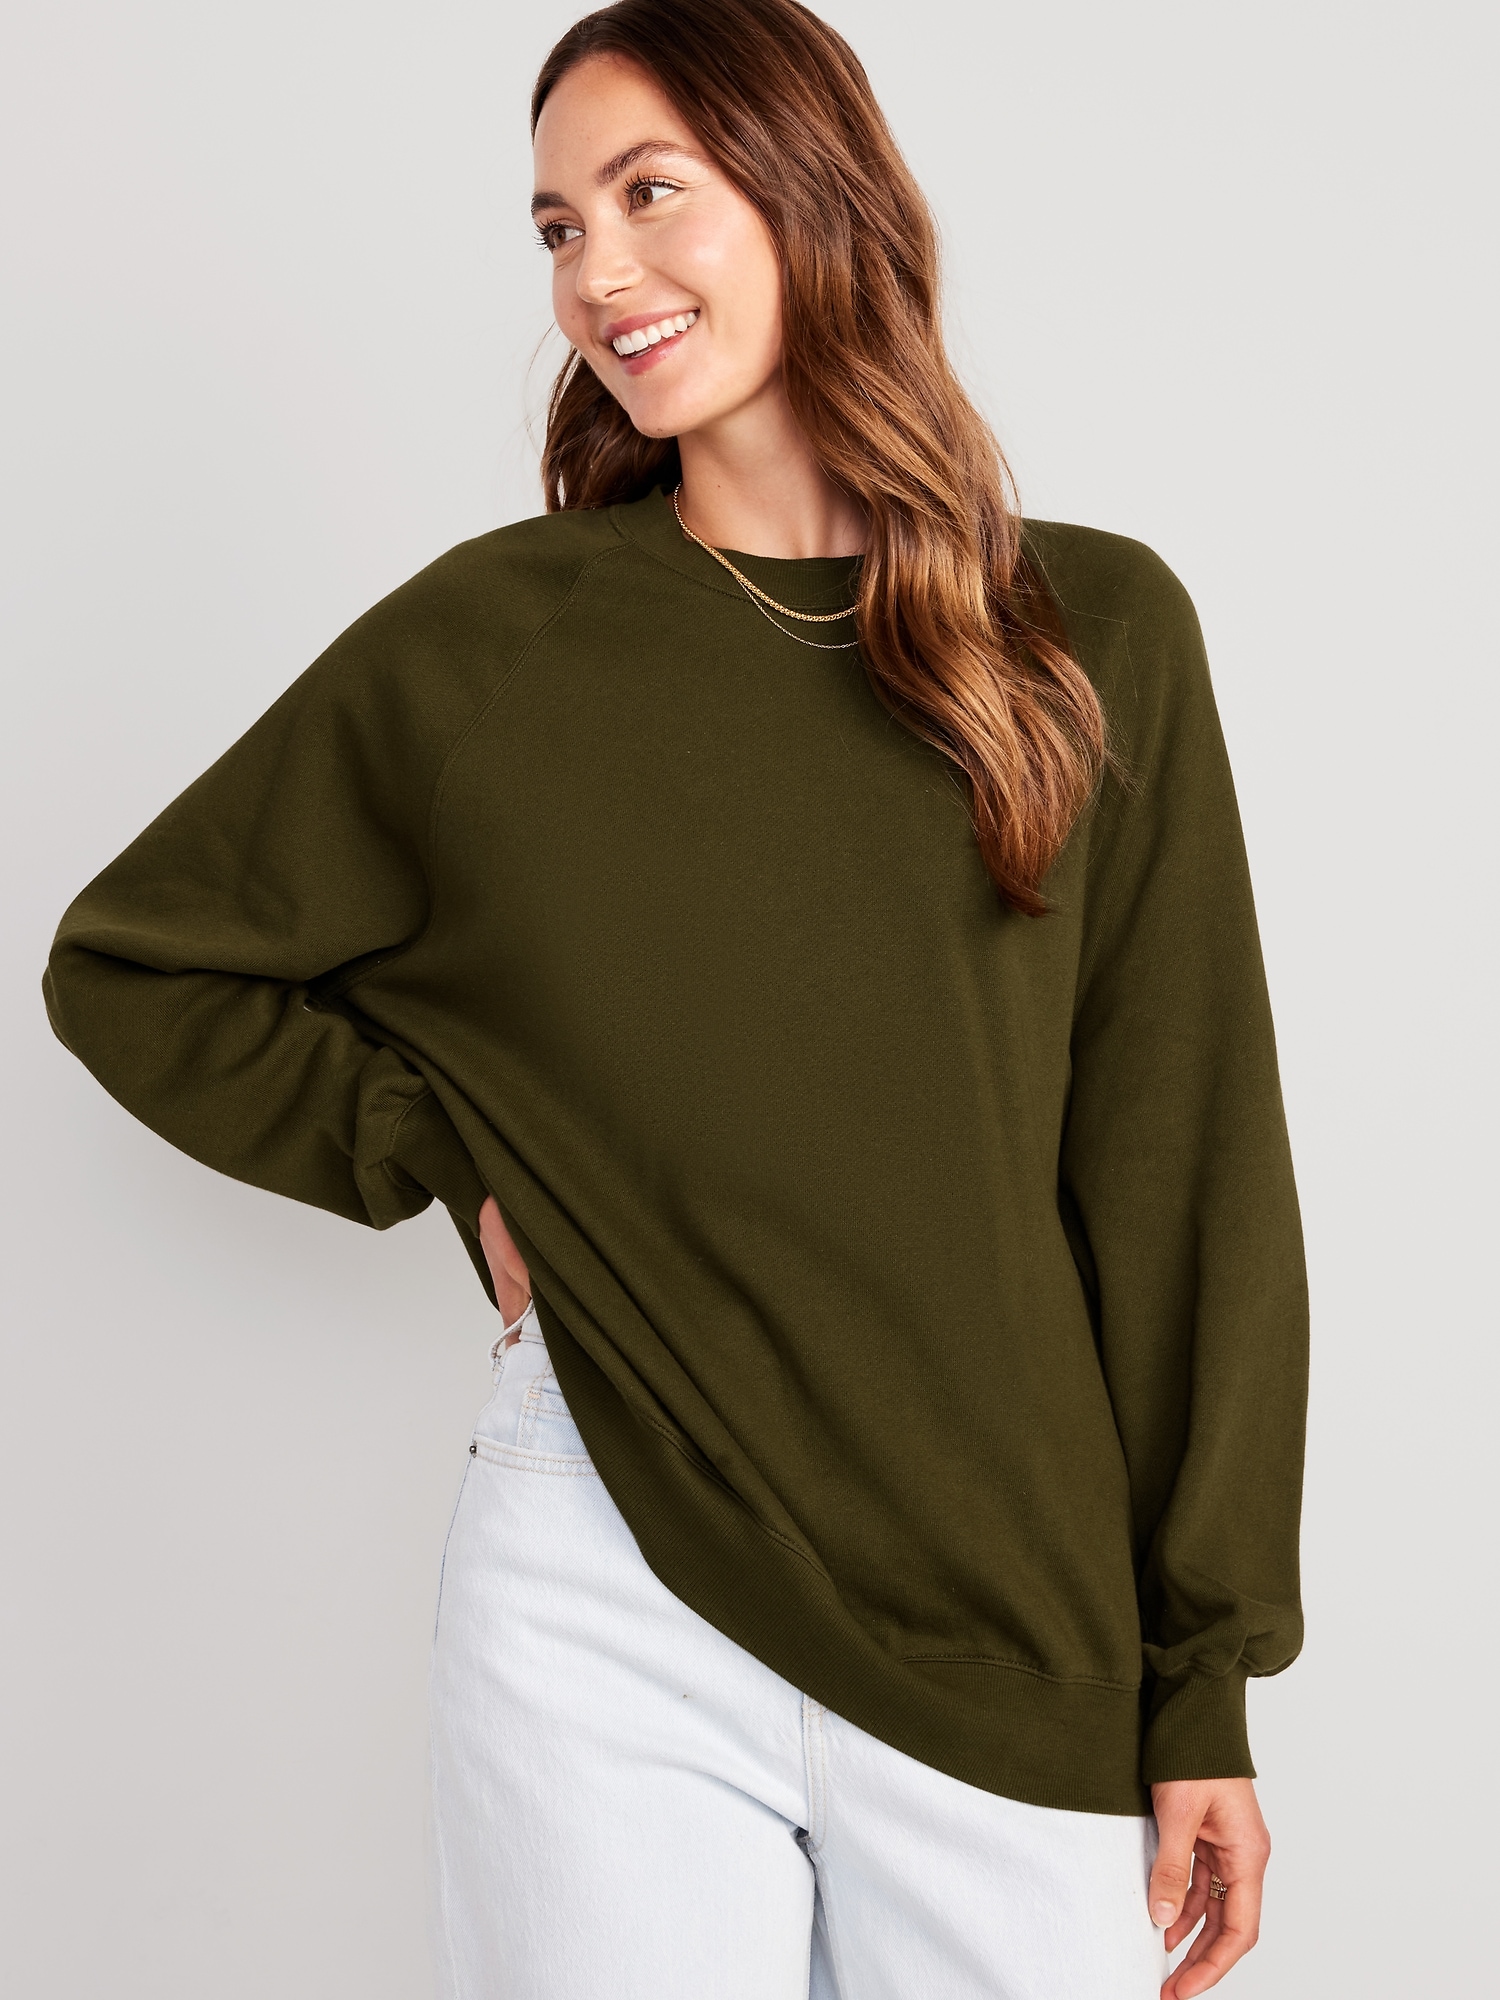 Sweatshirt for Women Graphic vintage Women's Sweatshirt O Neck Long  SleevePartiesLoose Pullover Blouse Casual Drawstring L102 Khaki, Khaki,  3X-Large